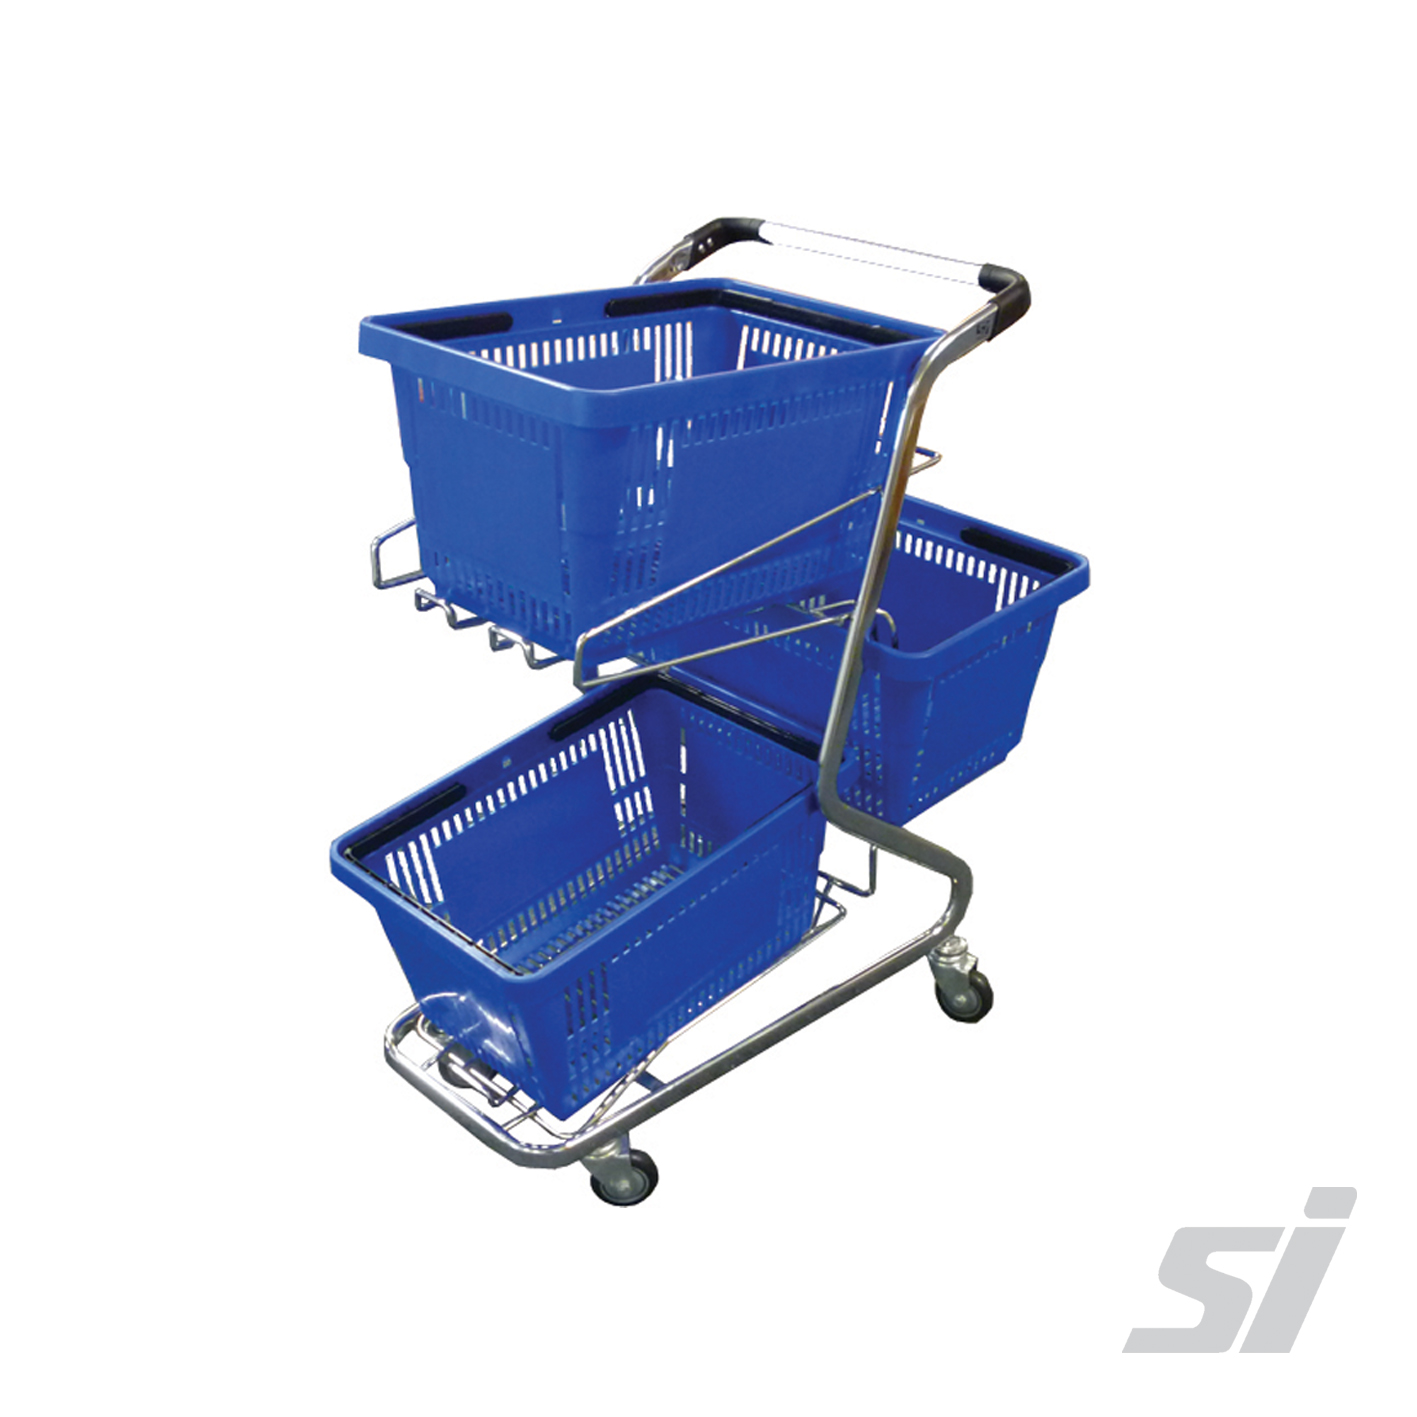 New mini retail shopping cart grey color 40x22x20.5 inch 75lb basket capacity 